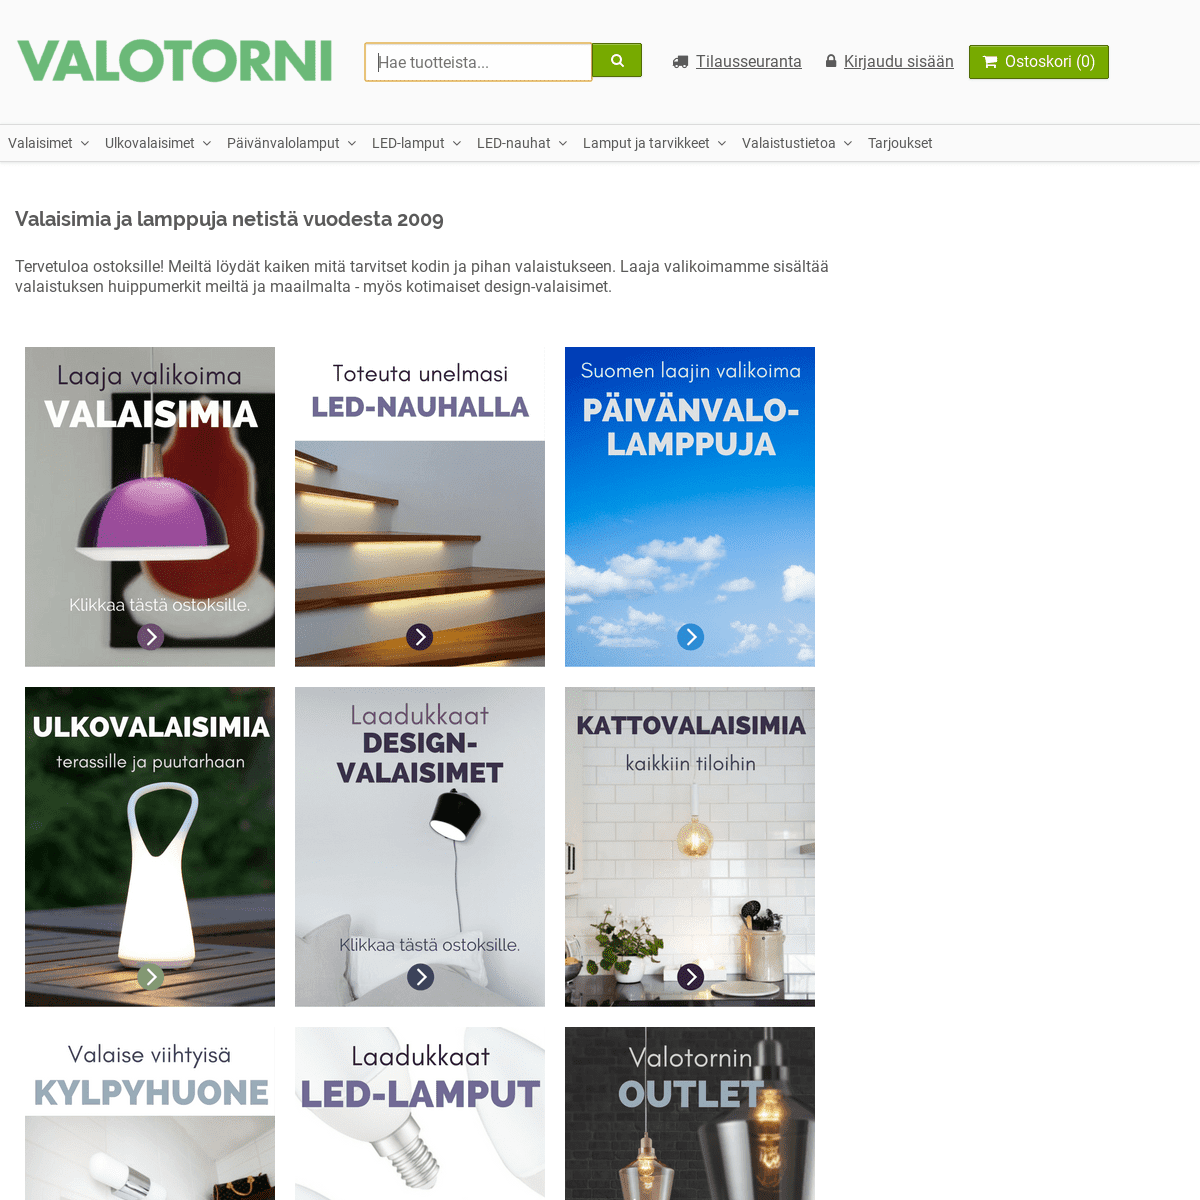 A complete backup of valotorni.fi